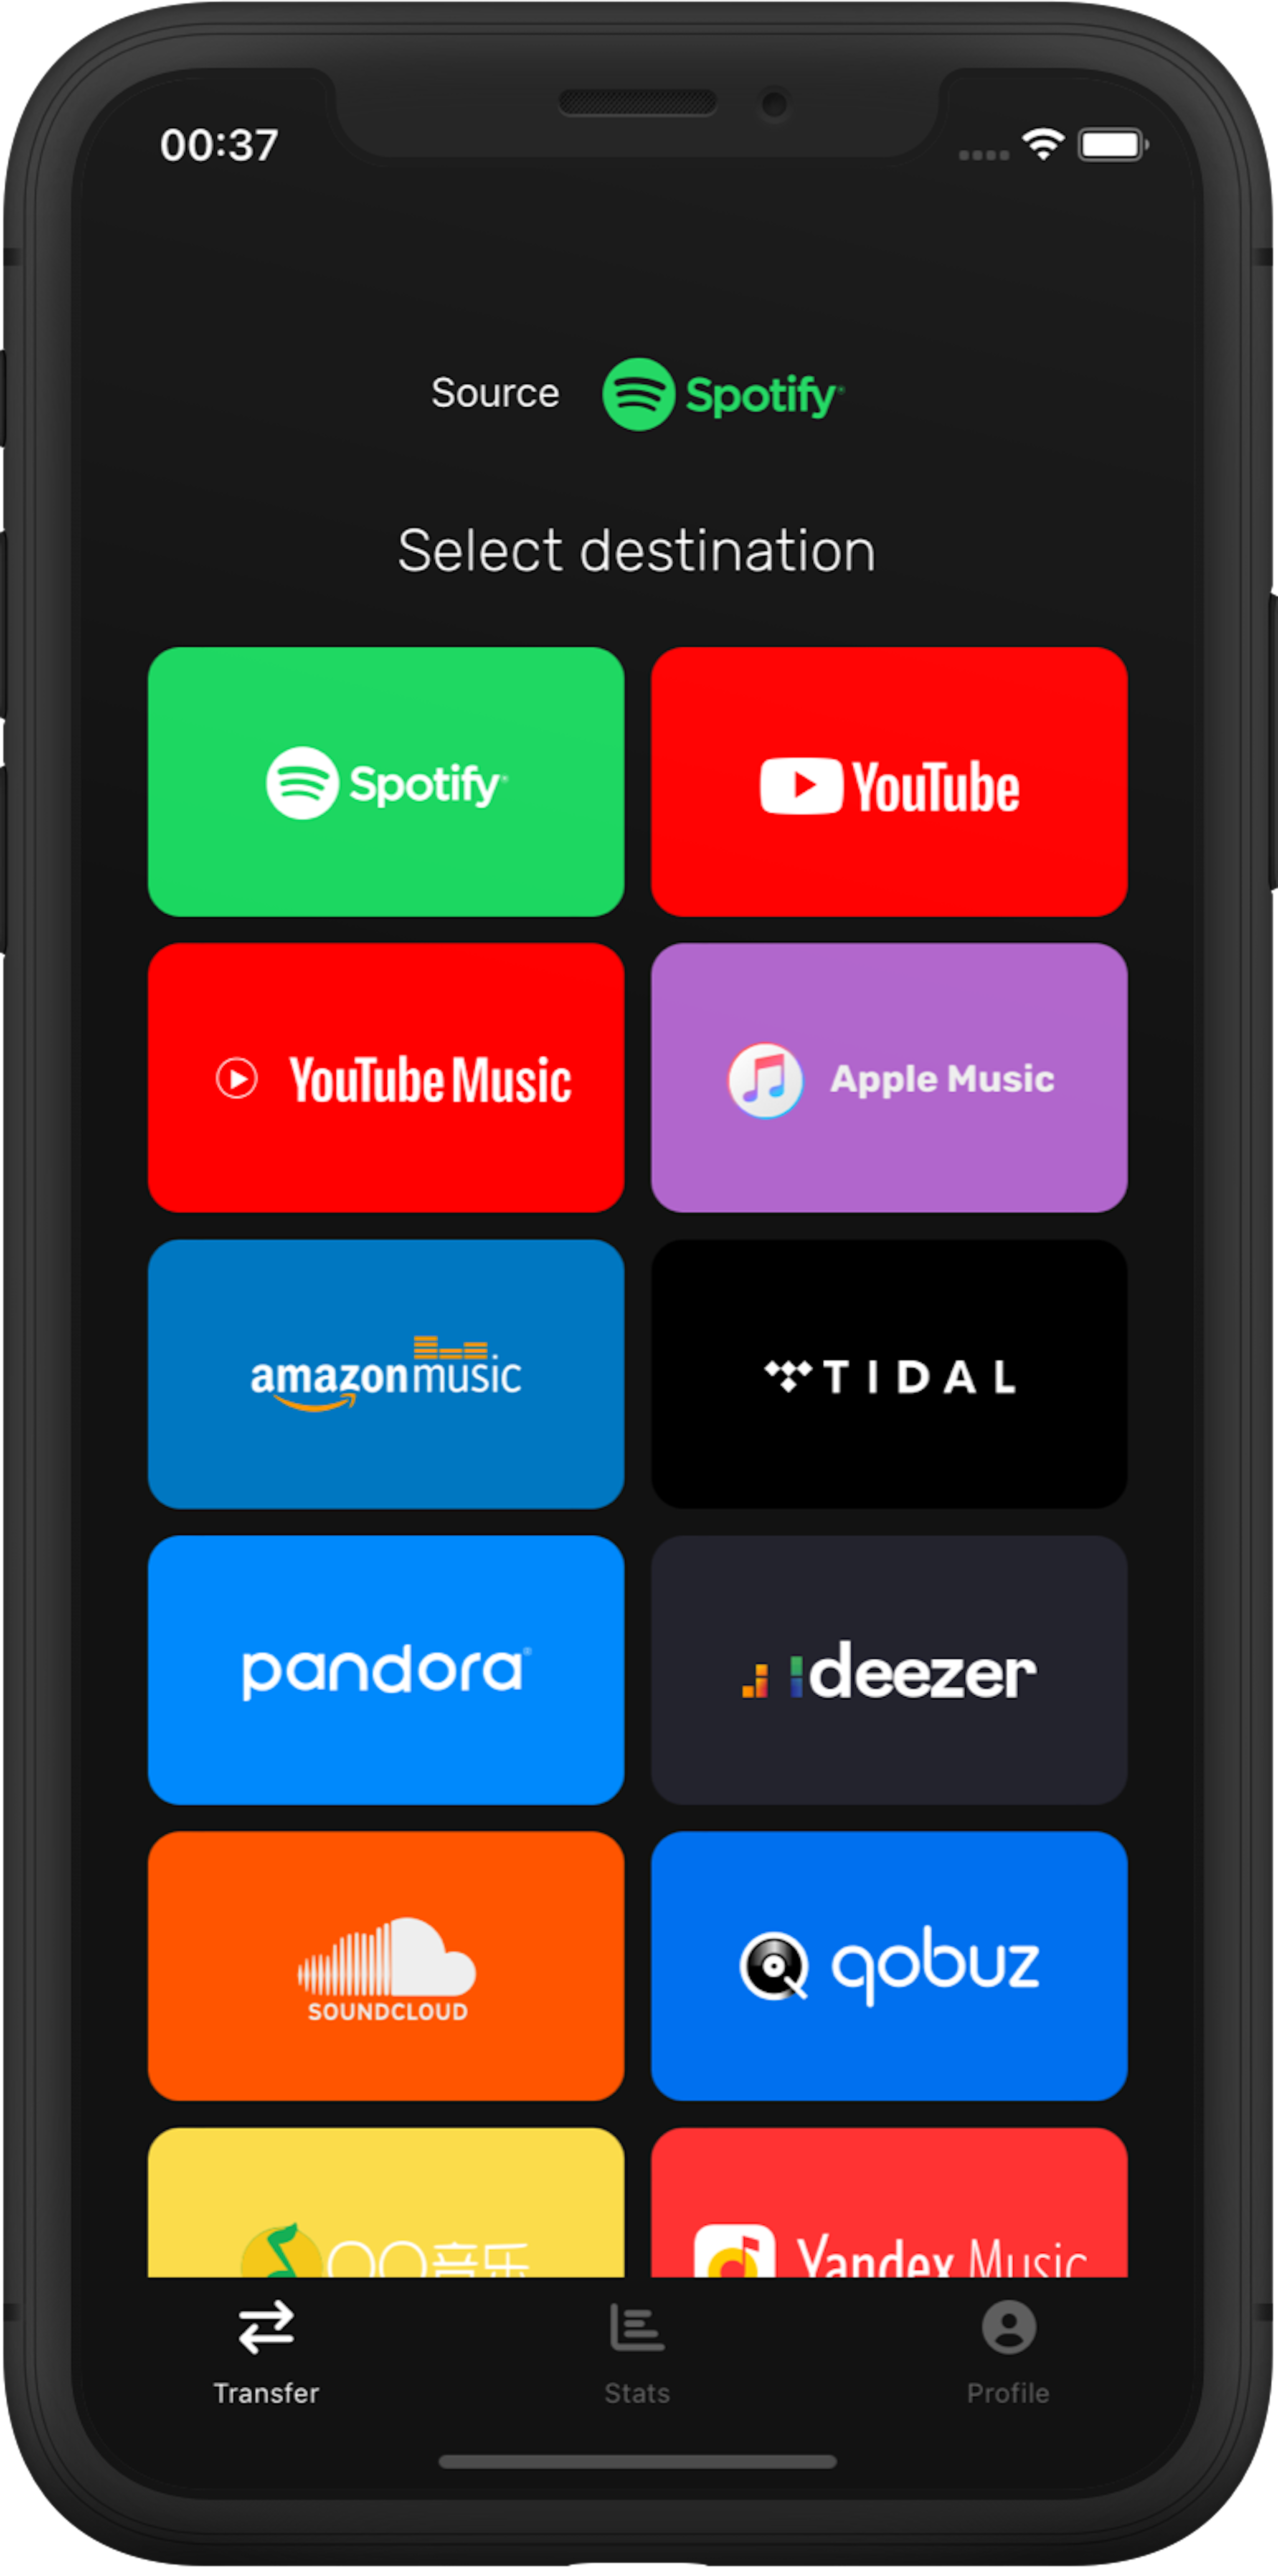 Step 2: Select Amazon Music as a destination music platform